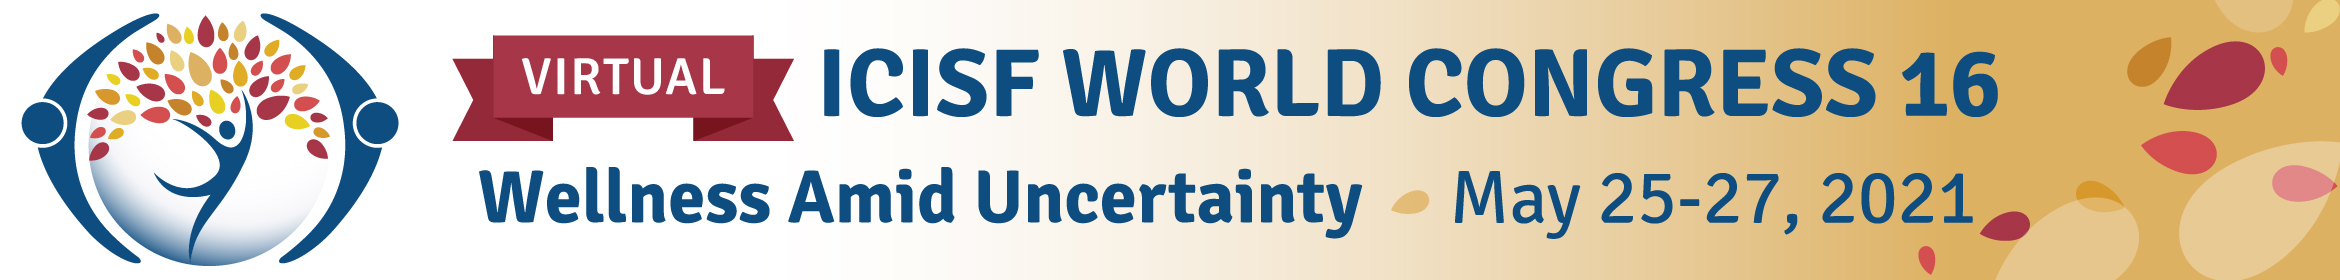 ICISF World Congress 16 Main banner